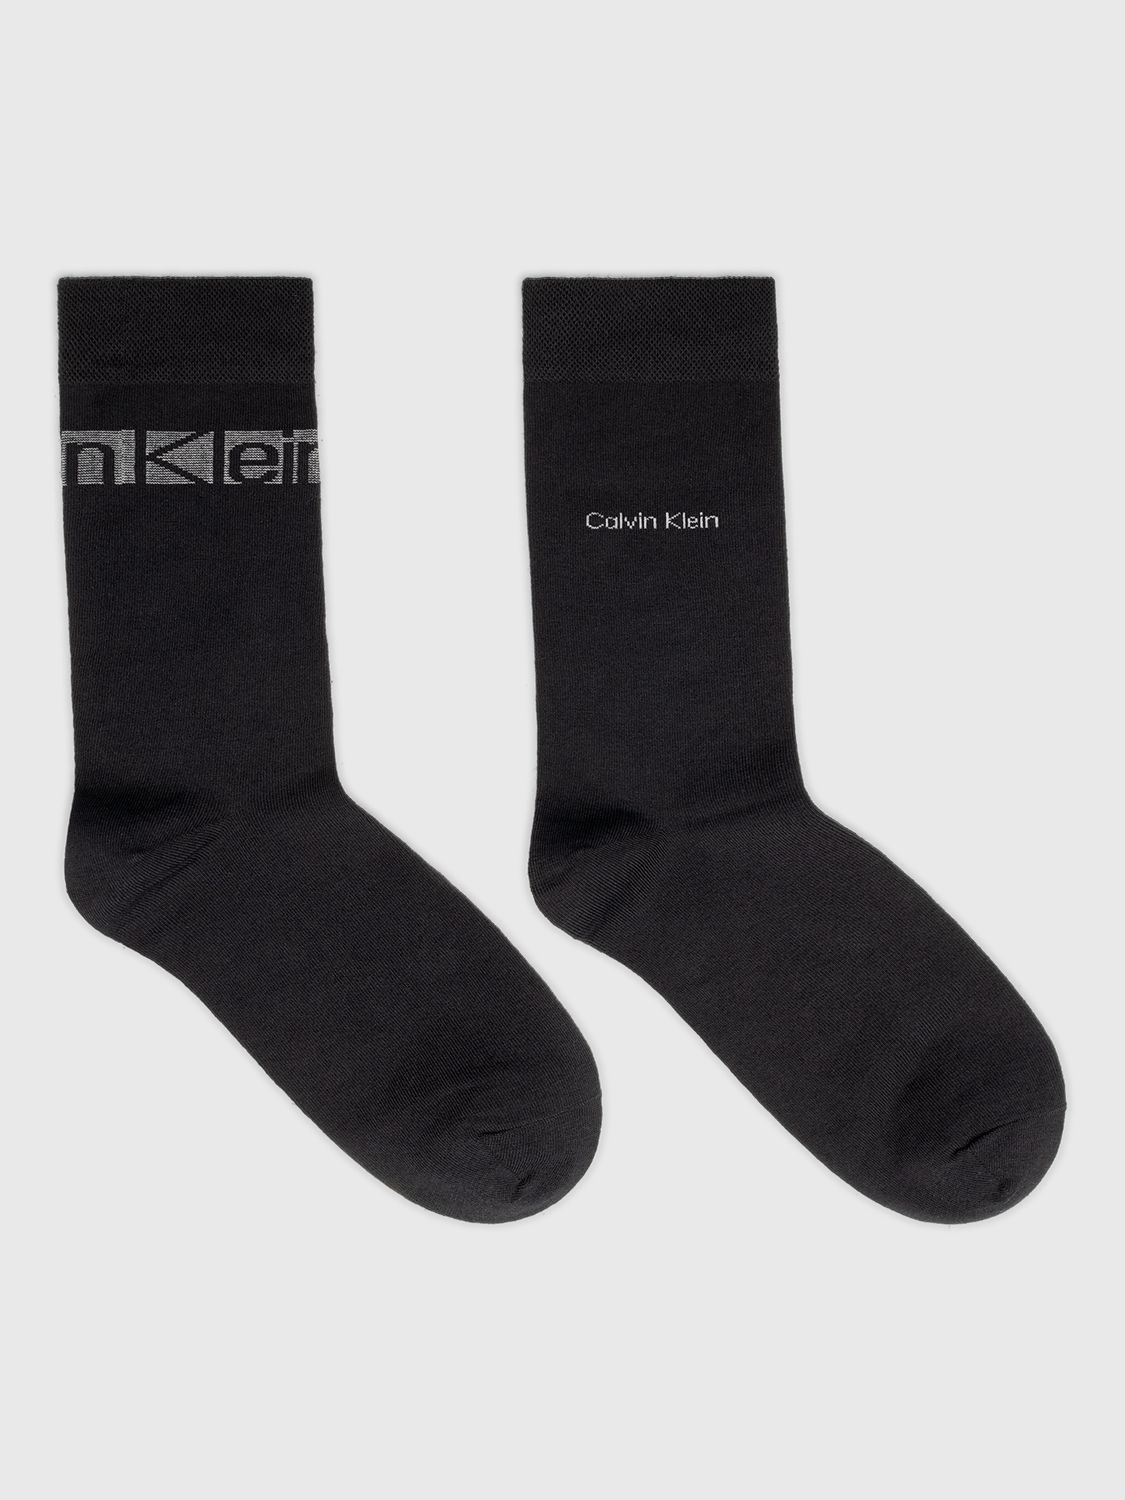 Buy Calvin Klein Logo Crew Socks, Pack of 2, Black Online at johnlewis.com